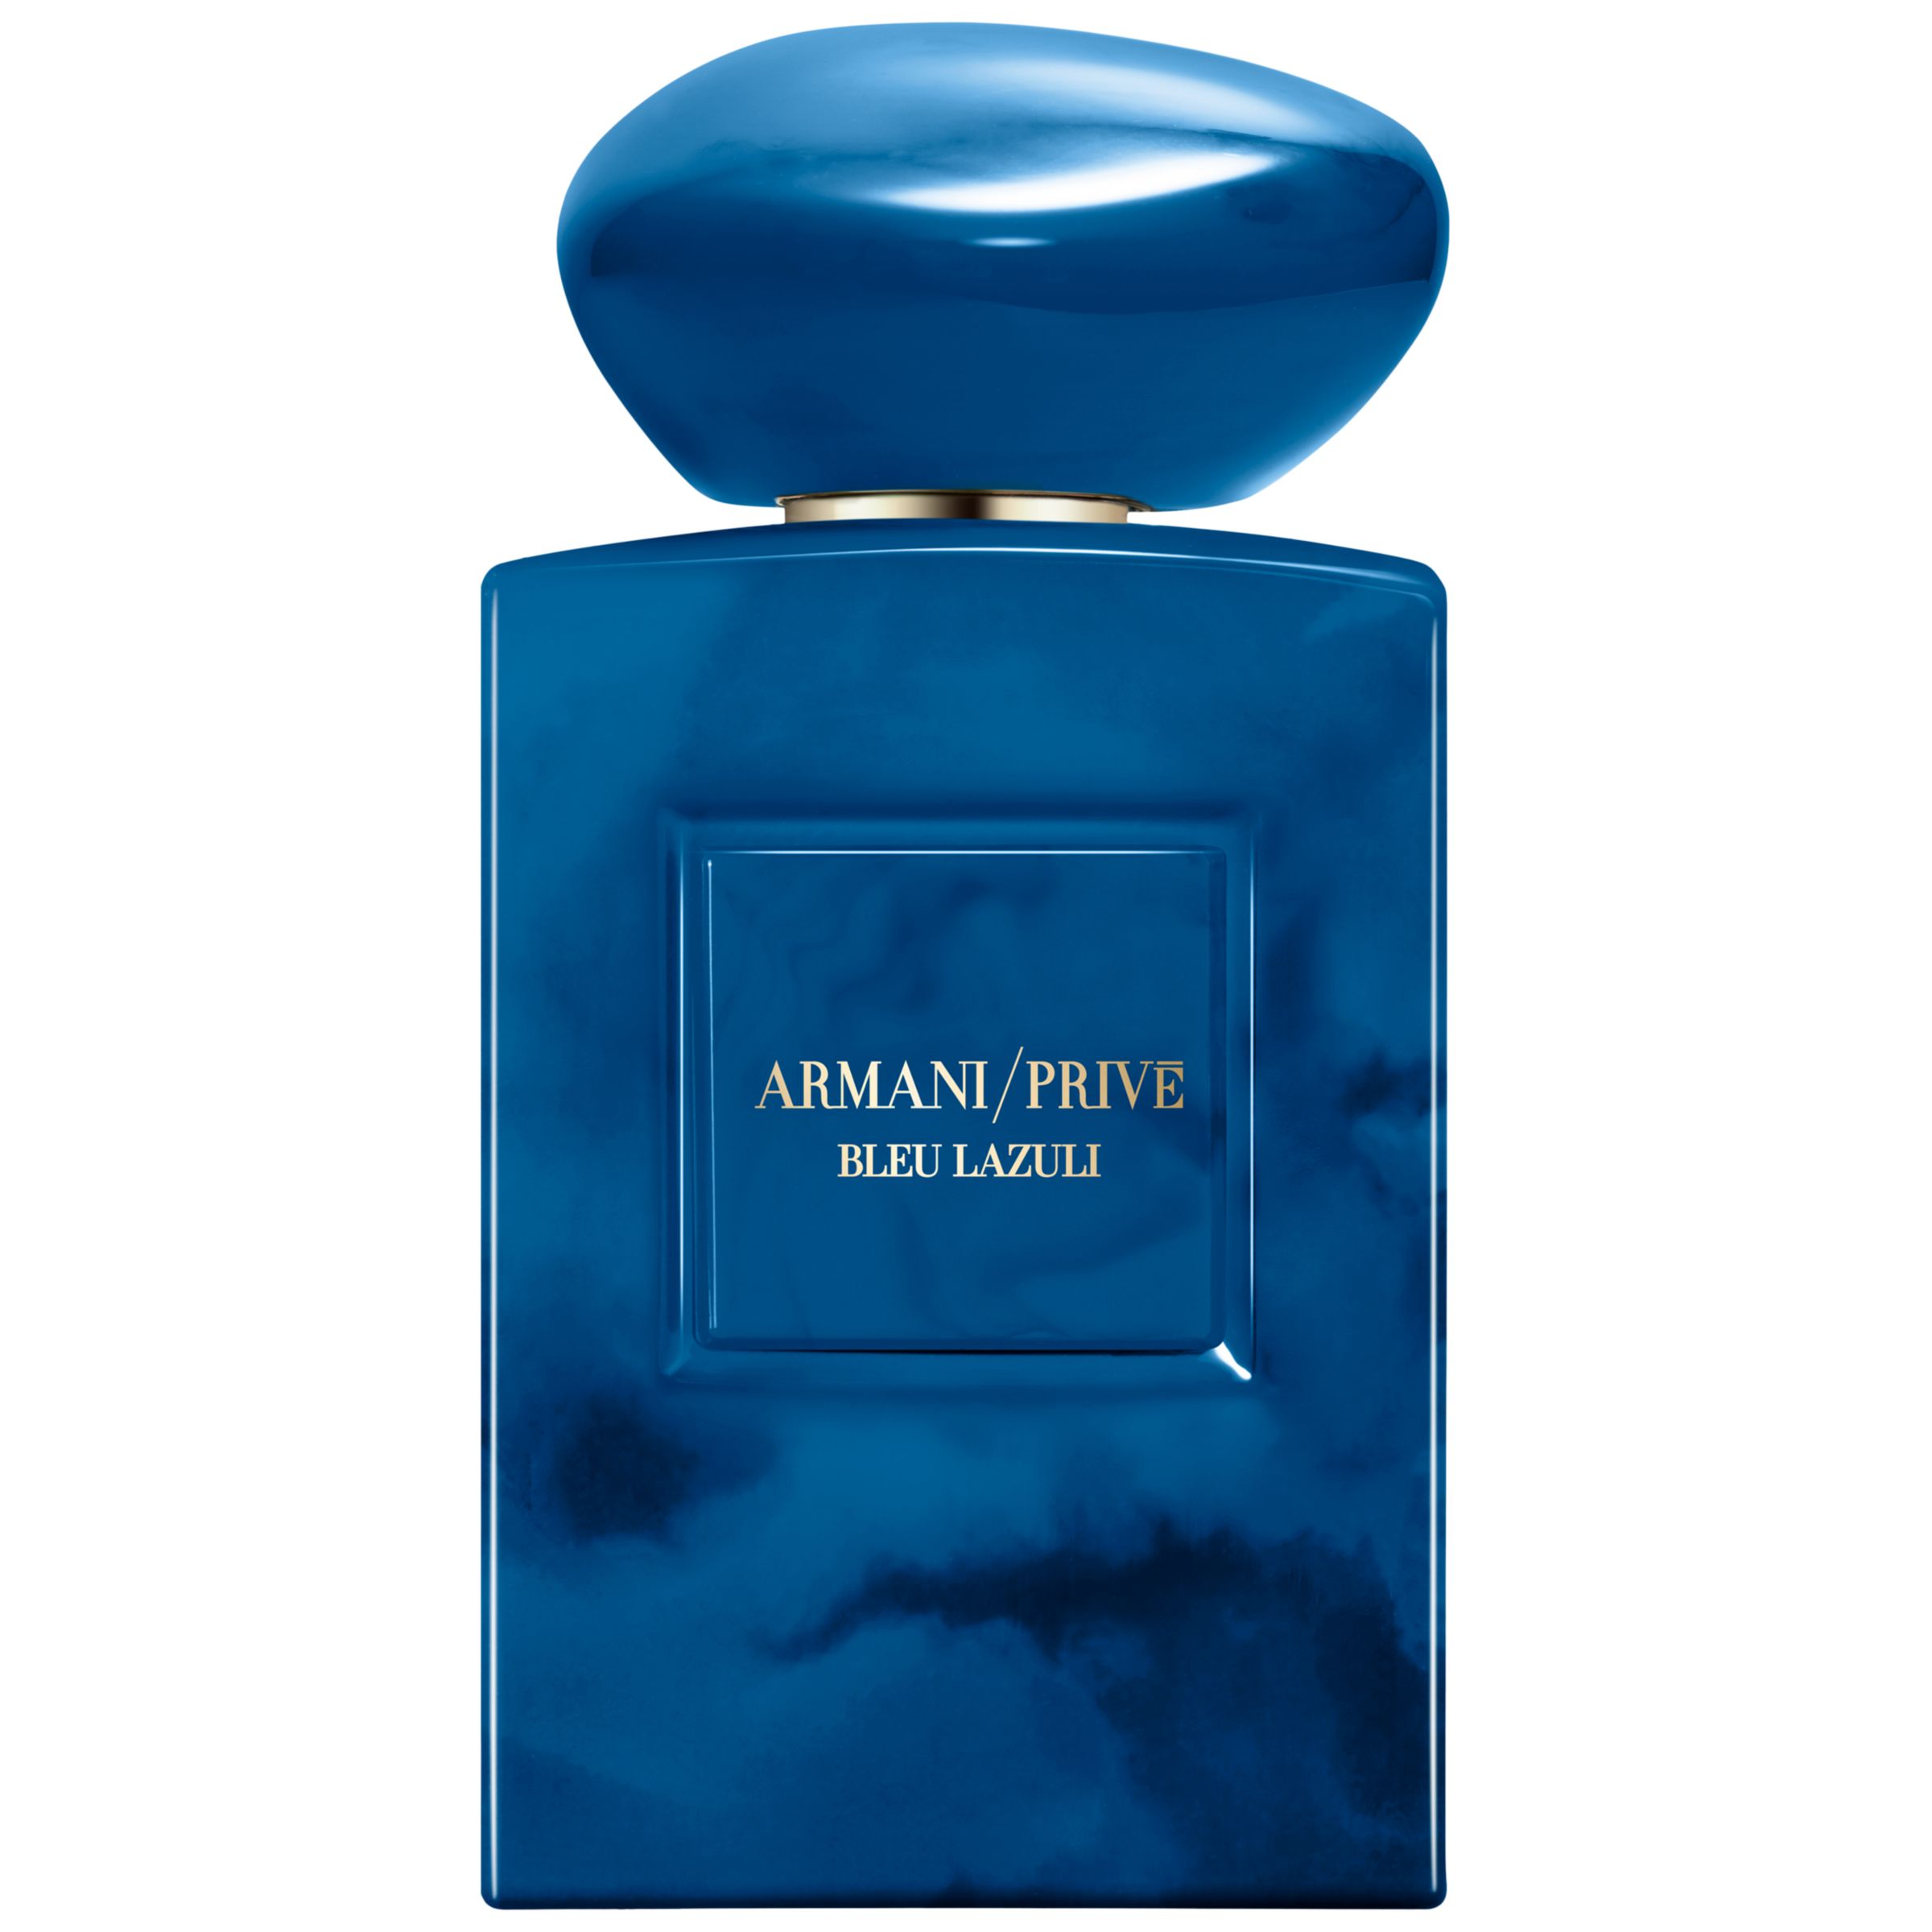 Giorgio Armani / Privé Bleu Lazuli Eau de Parfum, 100ml at John Lewis &  Partners